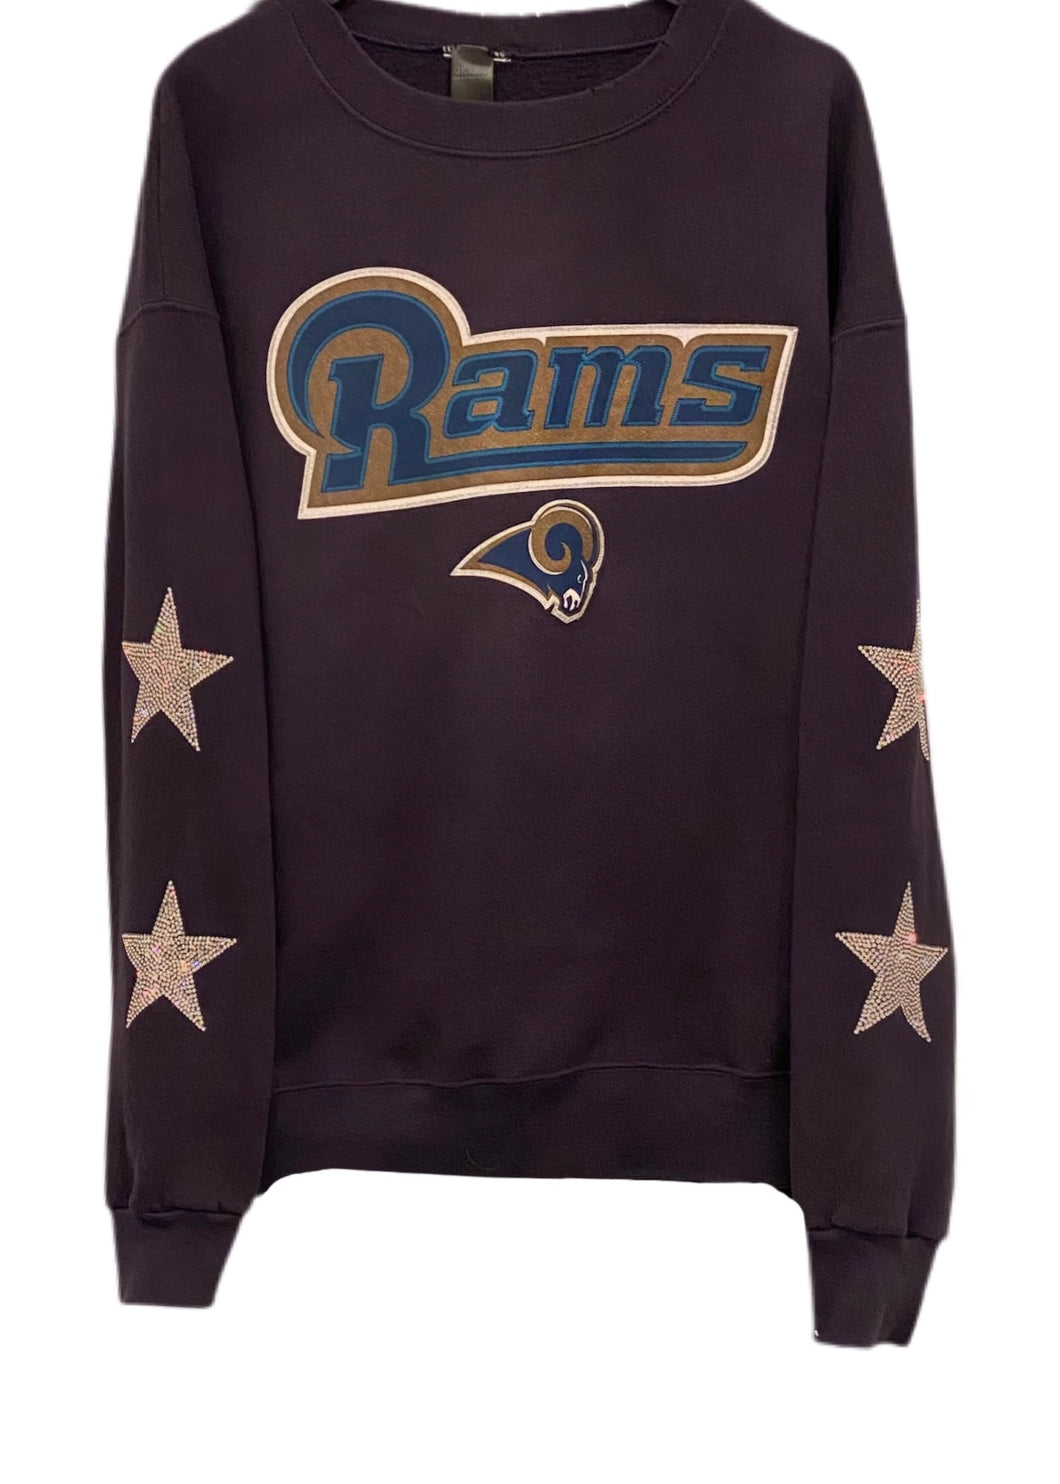 Los Angeles Rams , NFL One of a KIND Vintage LA Rams Sweatshirt with Crystal Star Design